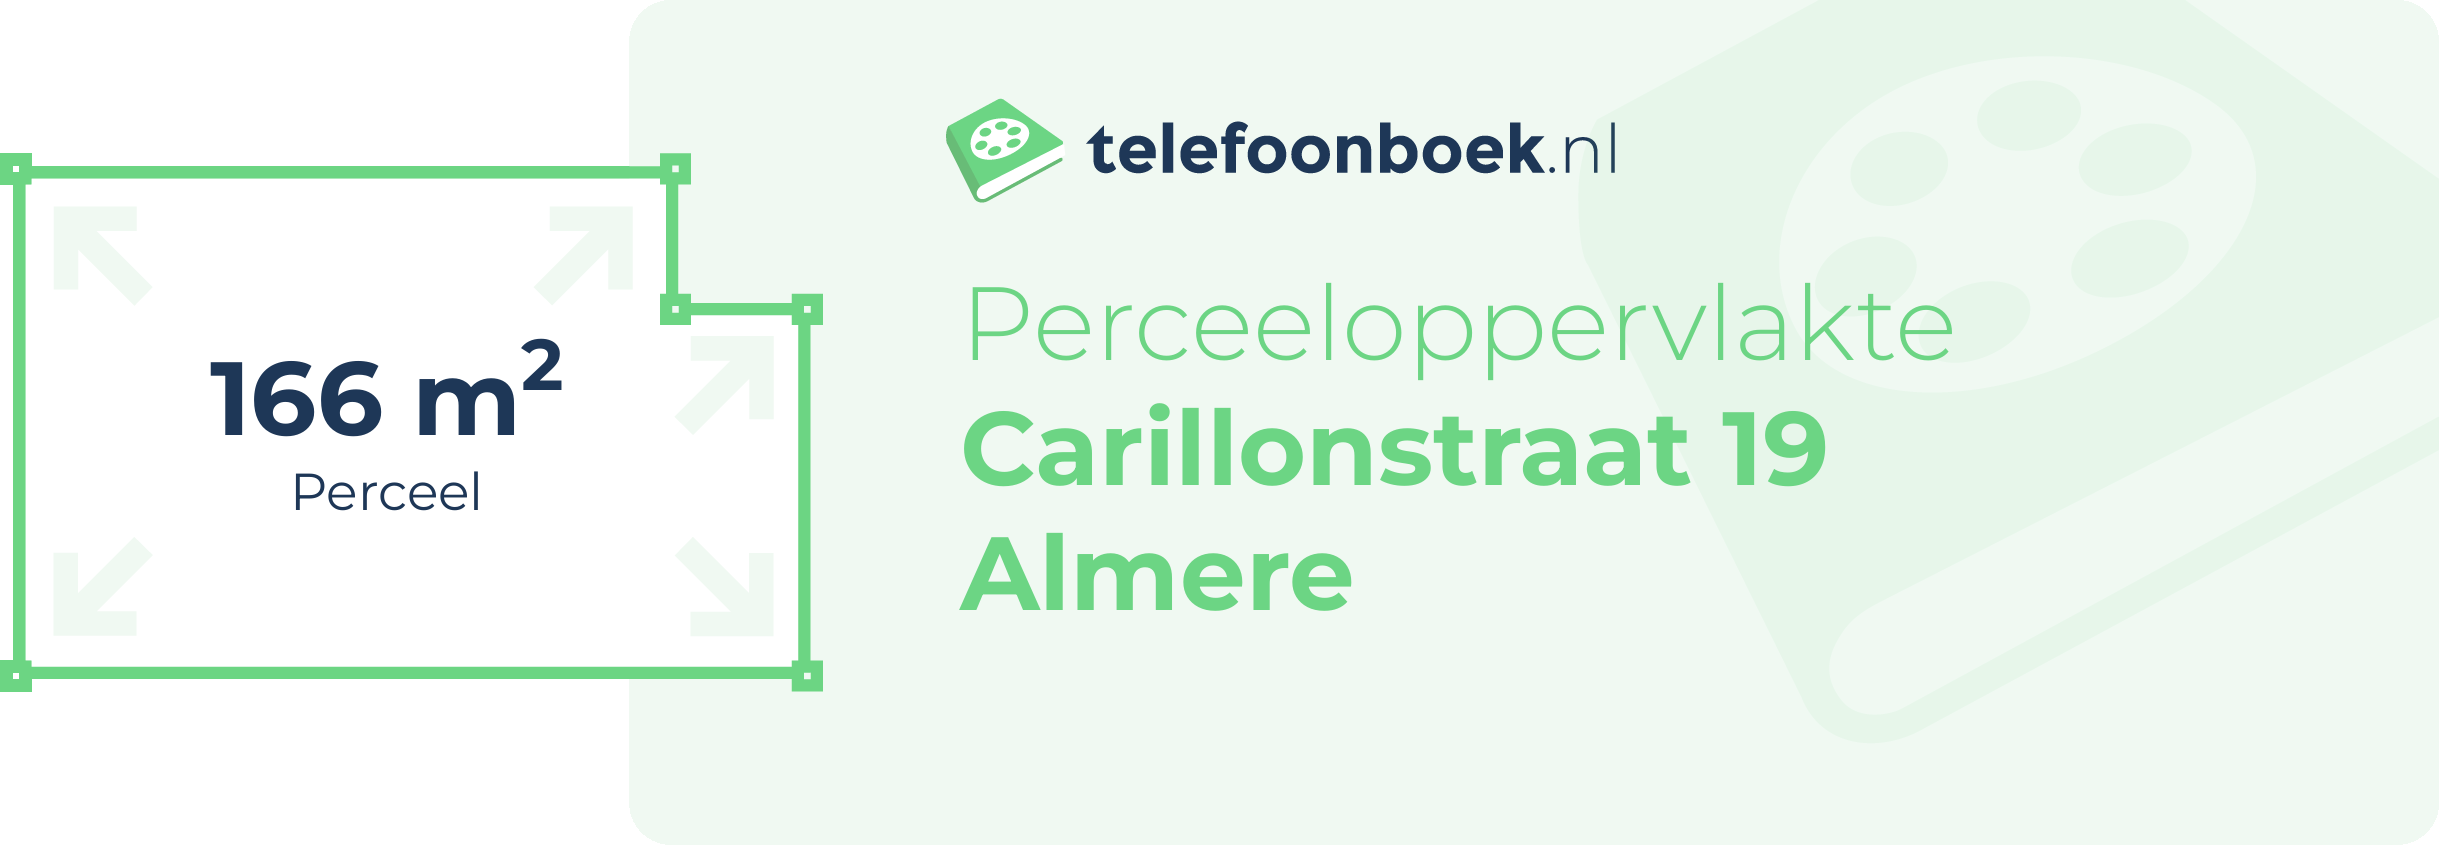 Perceeloppervlakte Carillonstraat 19 Almere